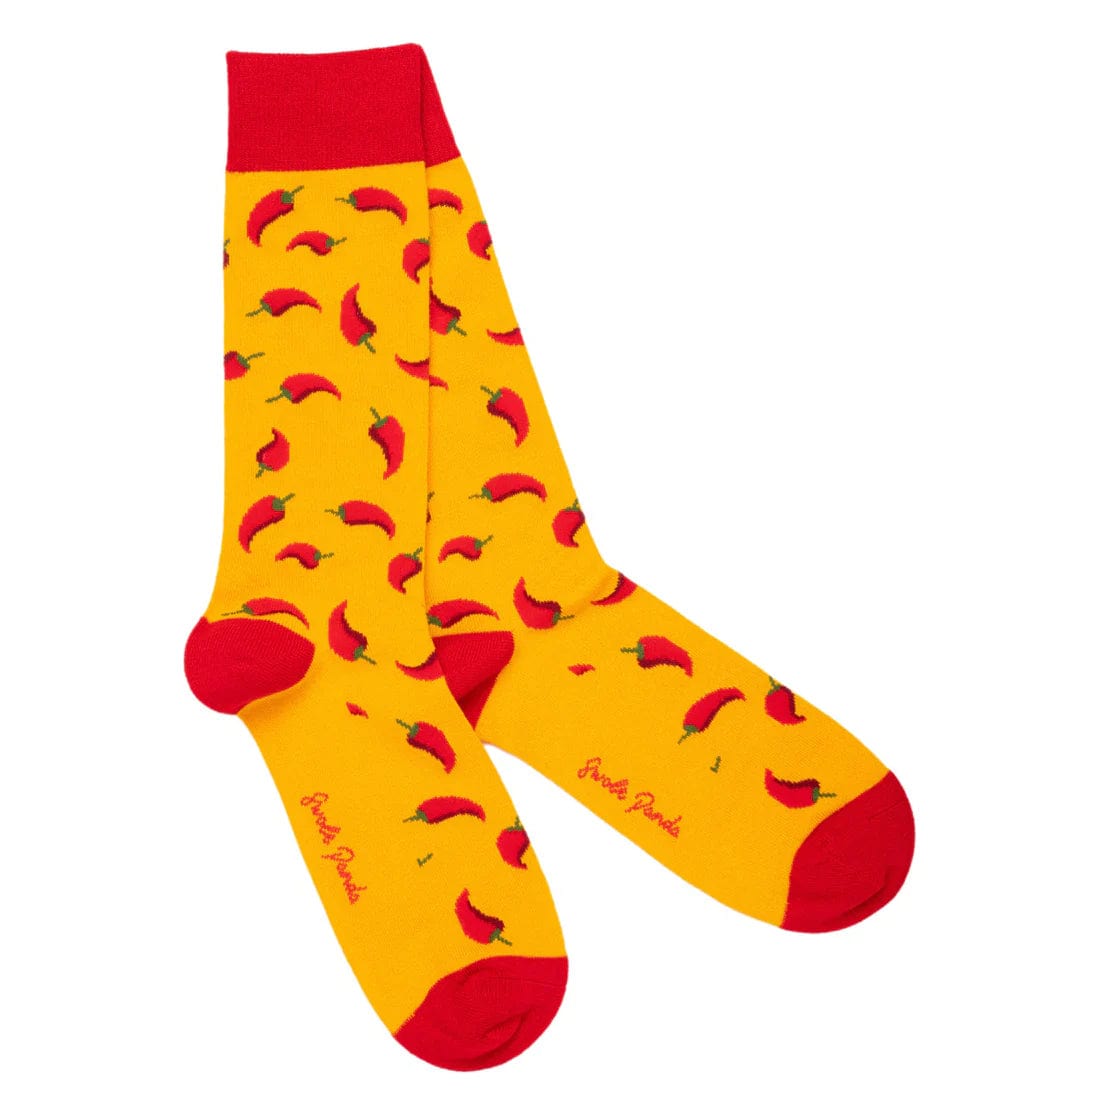 Swole Panda Red Chilli Socks in Orange/Red